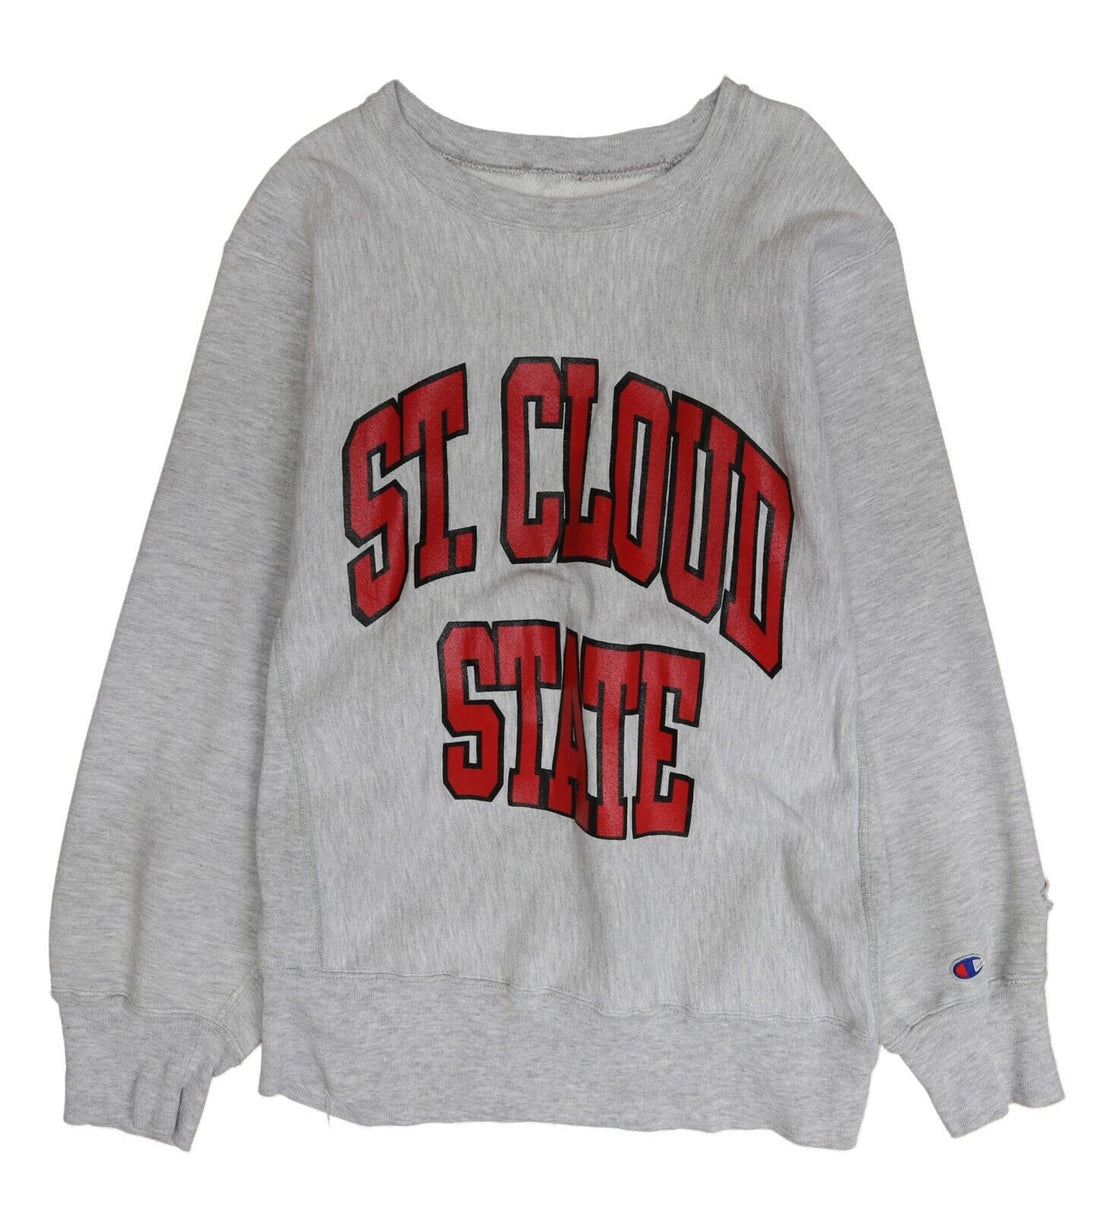 Vintage St Cloud State Champion Reverse Weave Sweatshirt Size Medium Gray 90s